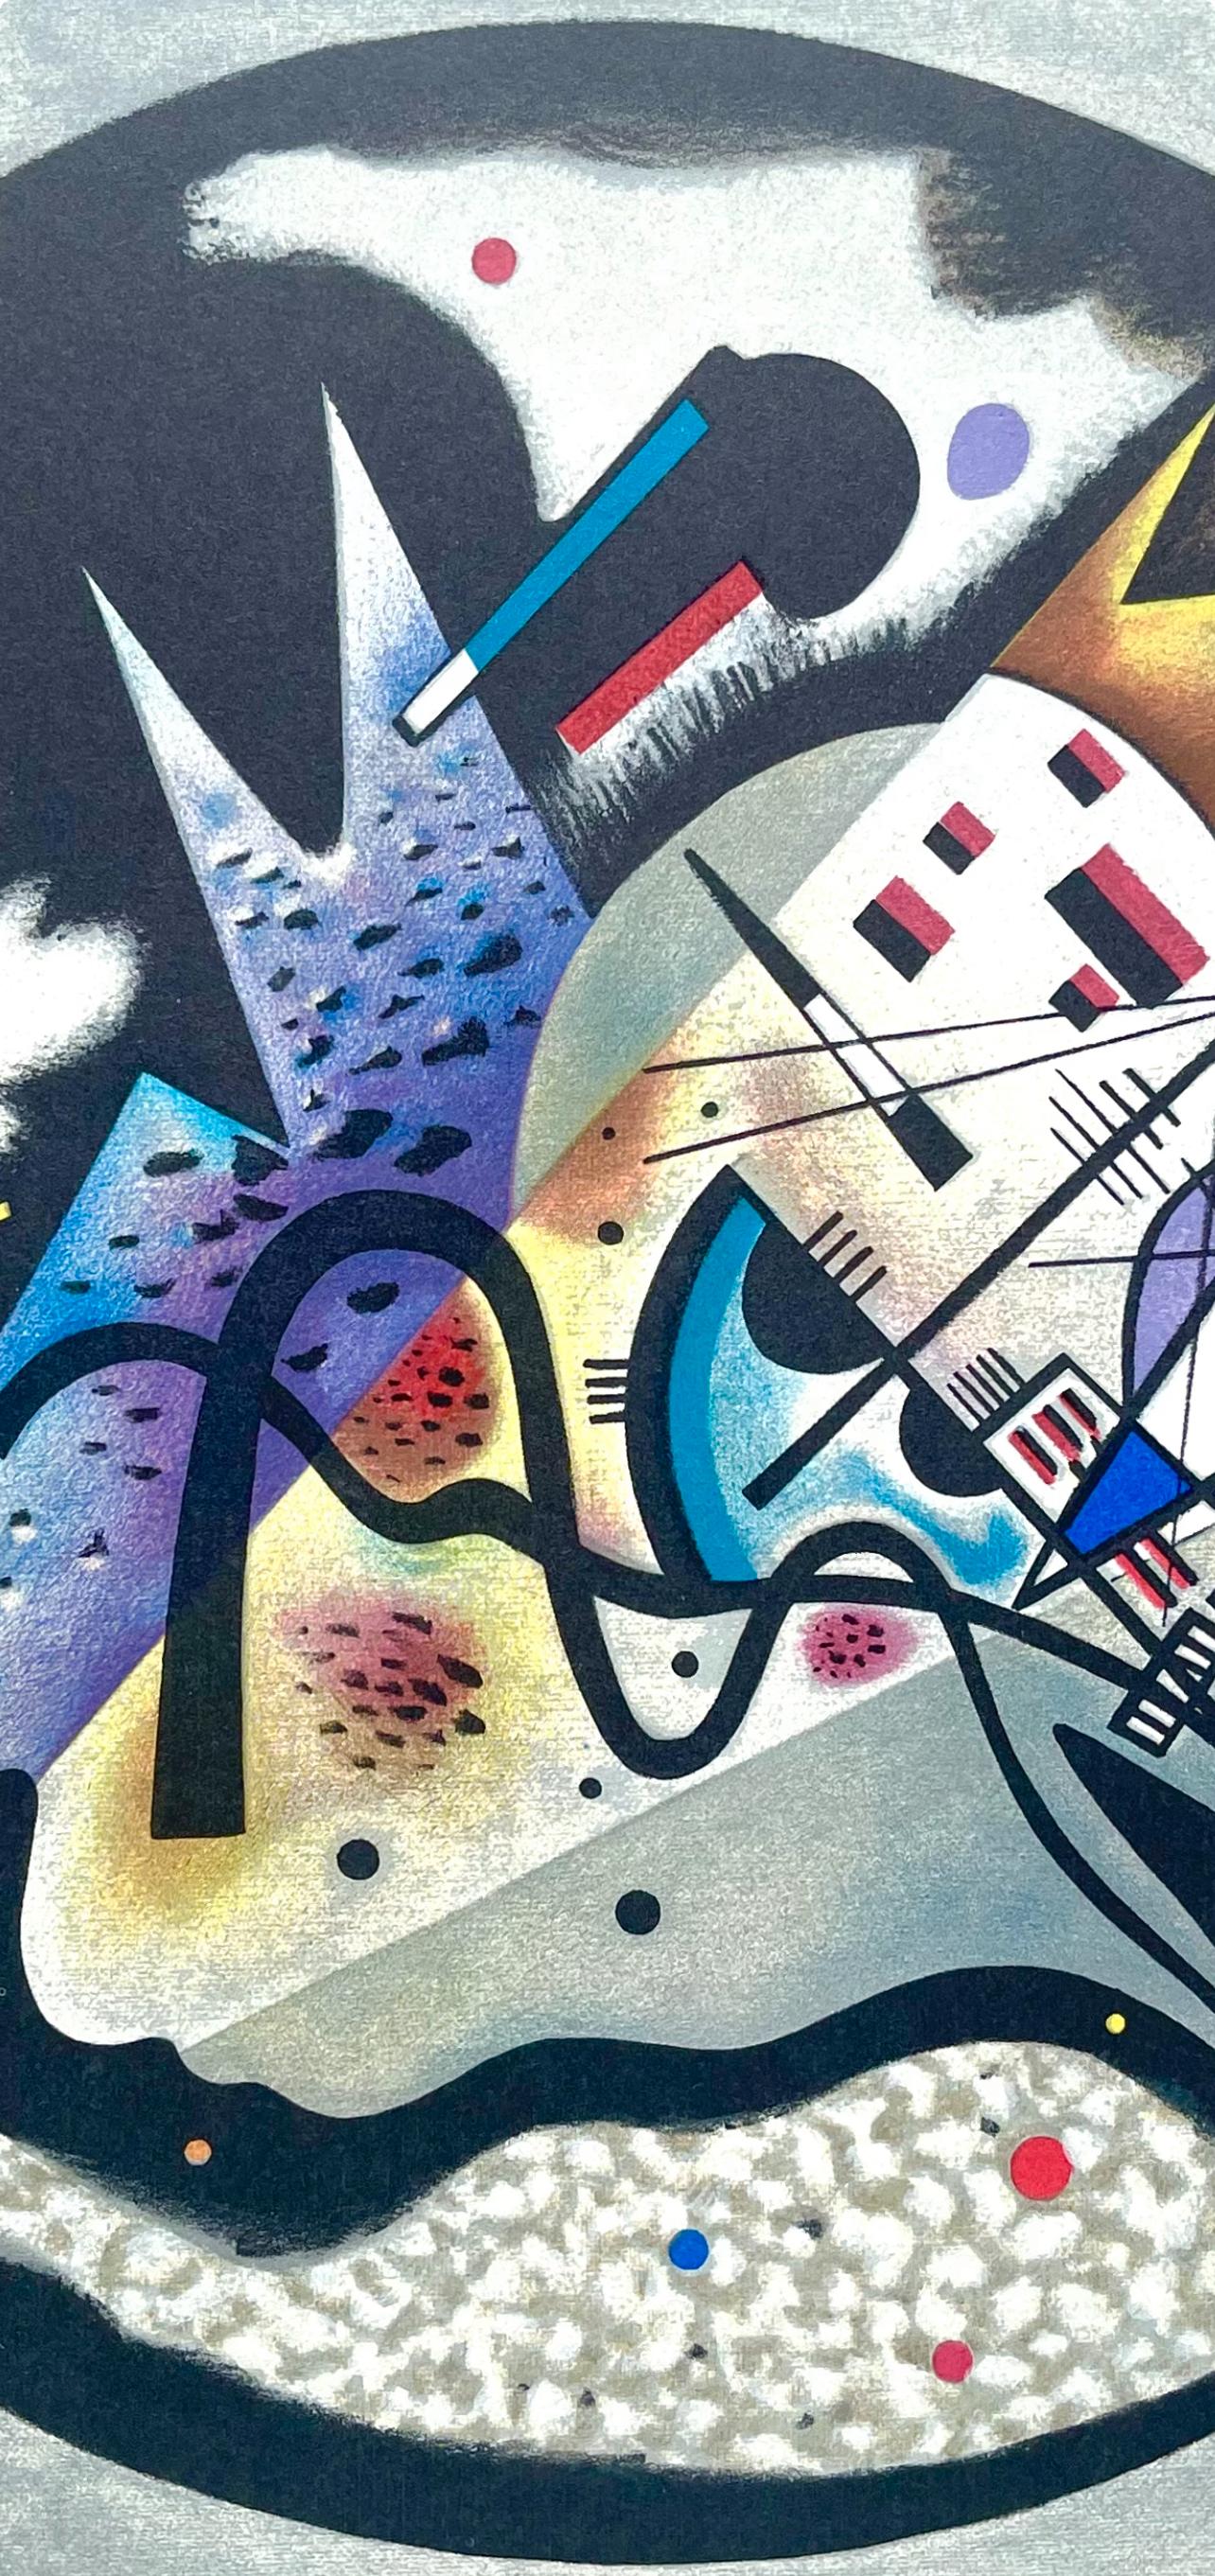 Kandinsky, Composition, Derrière le miroir (after) - Print by Wassily Kandinsky